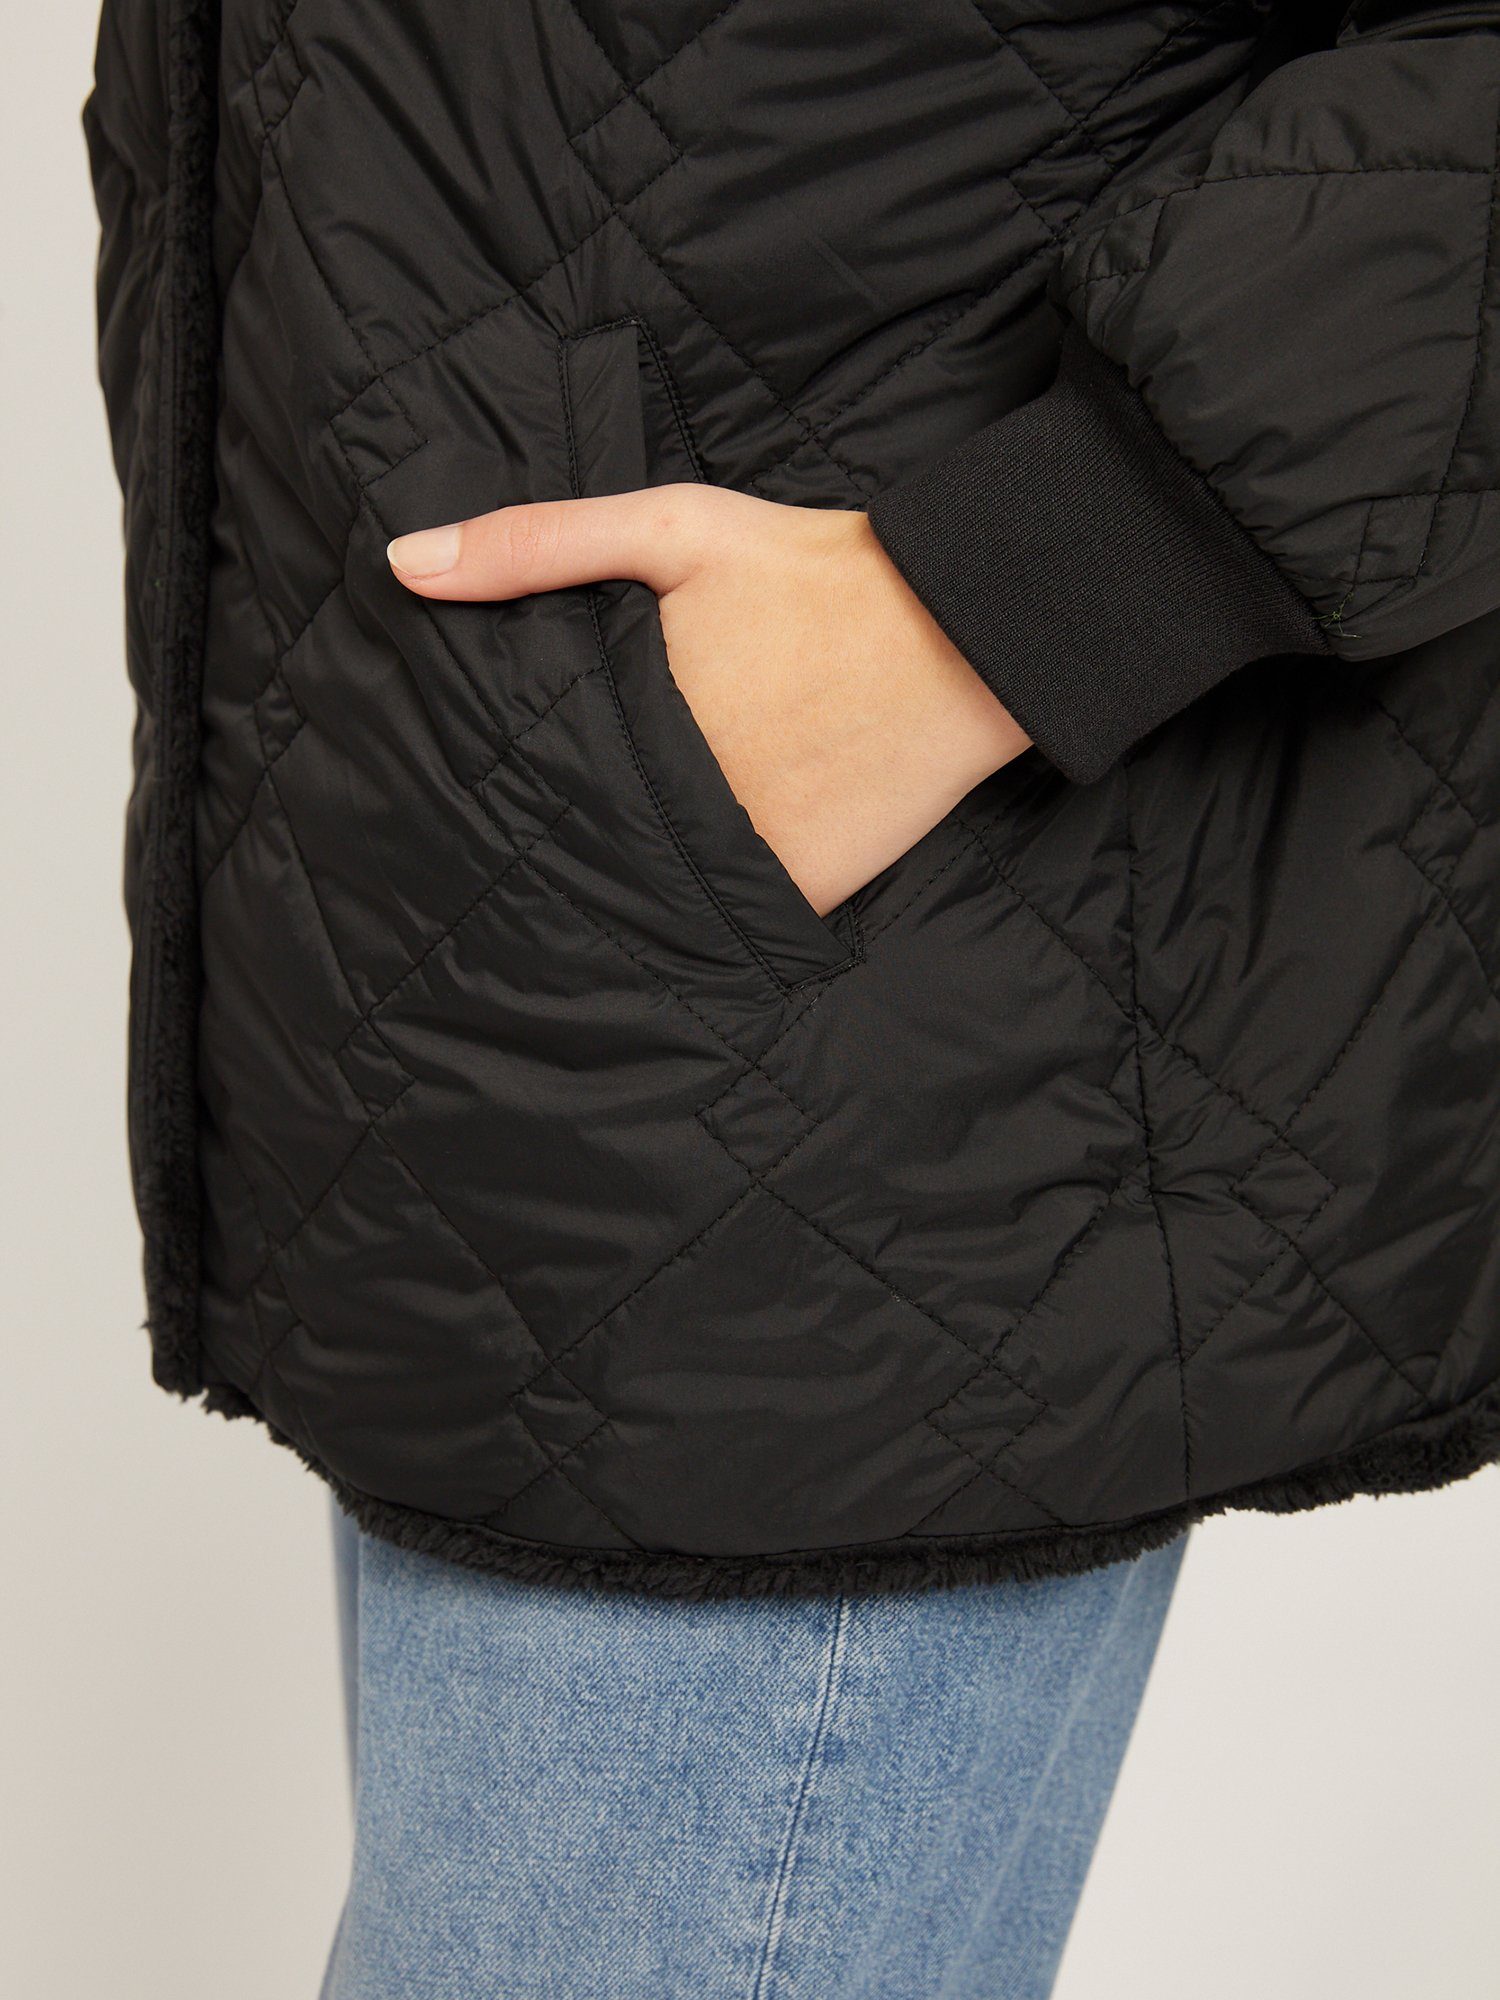 MAZINE Winterjacke Clay Light Down Jacket gefüttert black warm